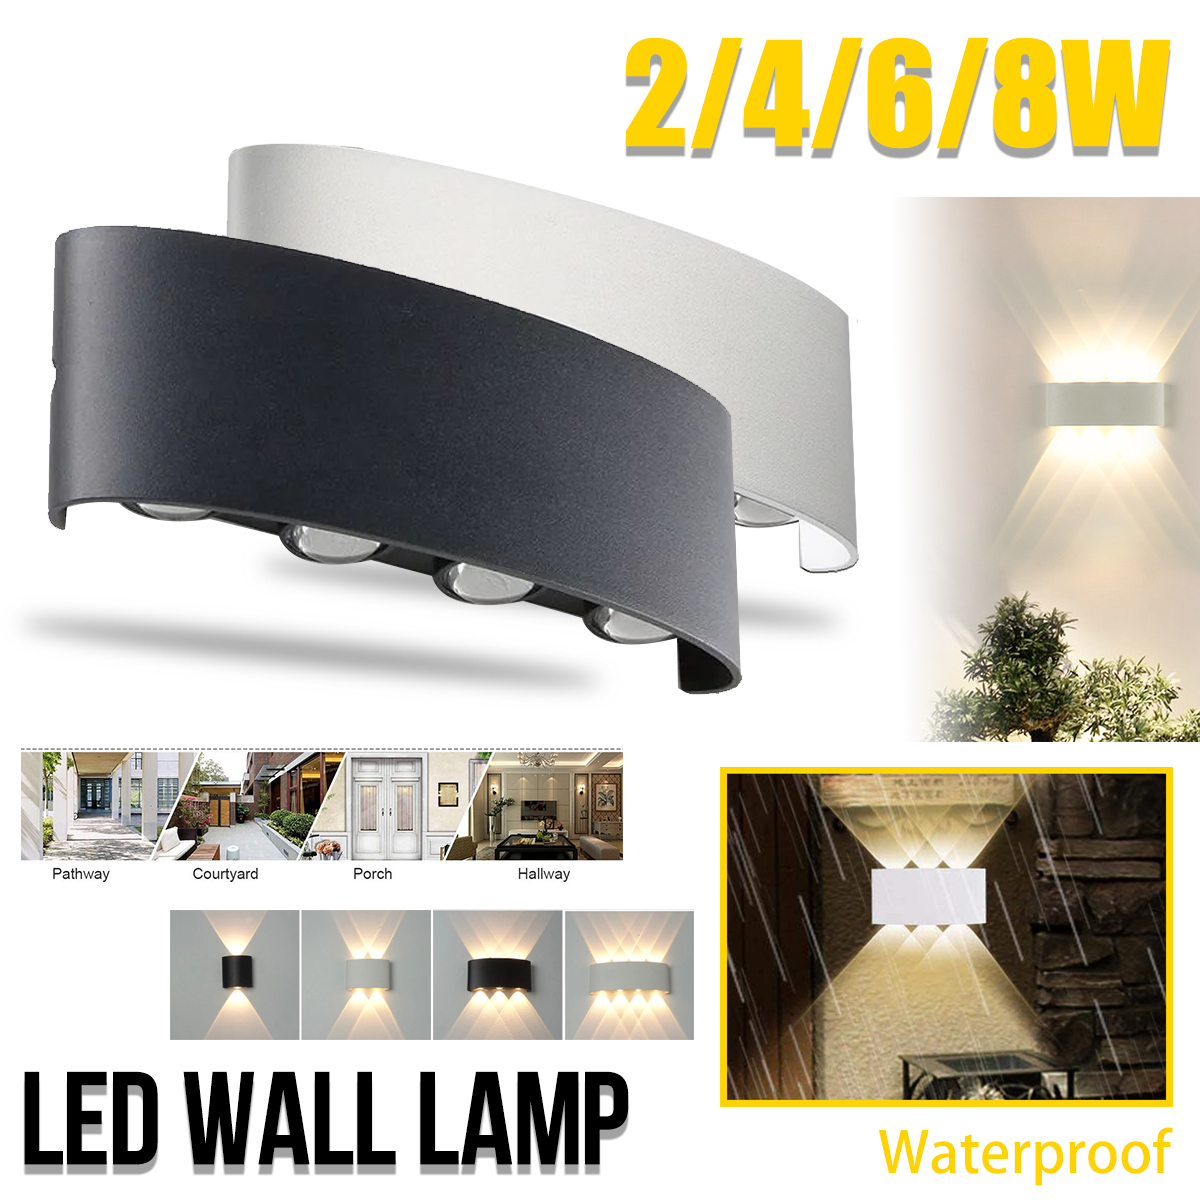 Waterproof-2-8W-LED-Wall-Light-Up-Down-Lighting-Sconce-Lamp-Indoor-Outdoor-IP65-1850910-4